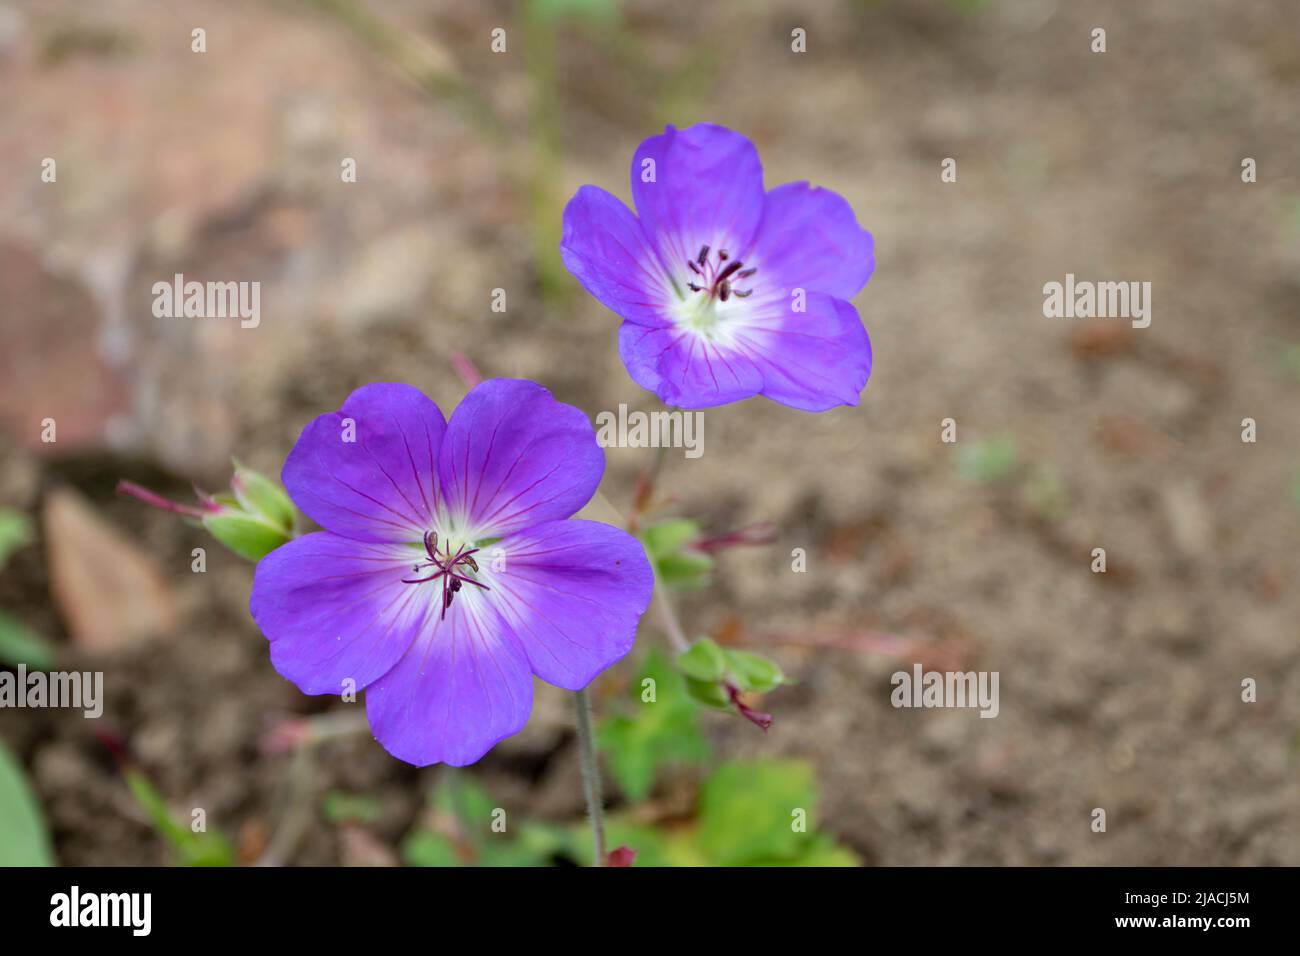 Purple geranium or cranesbill flowers closeup on the blurred background Stock Photo